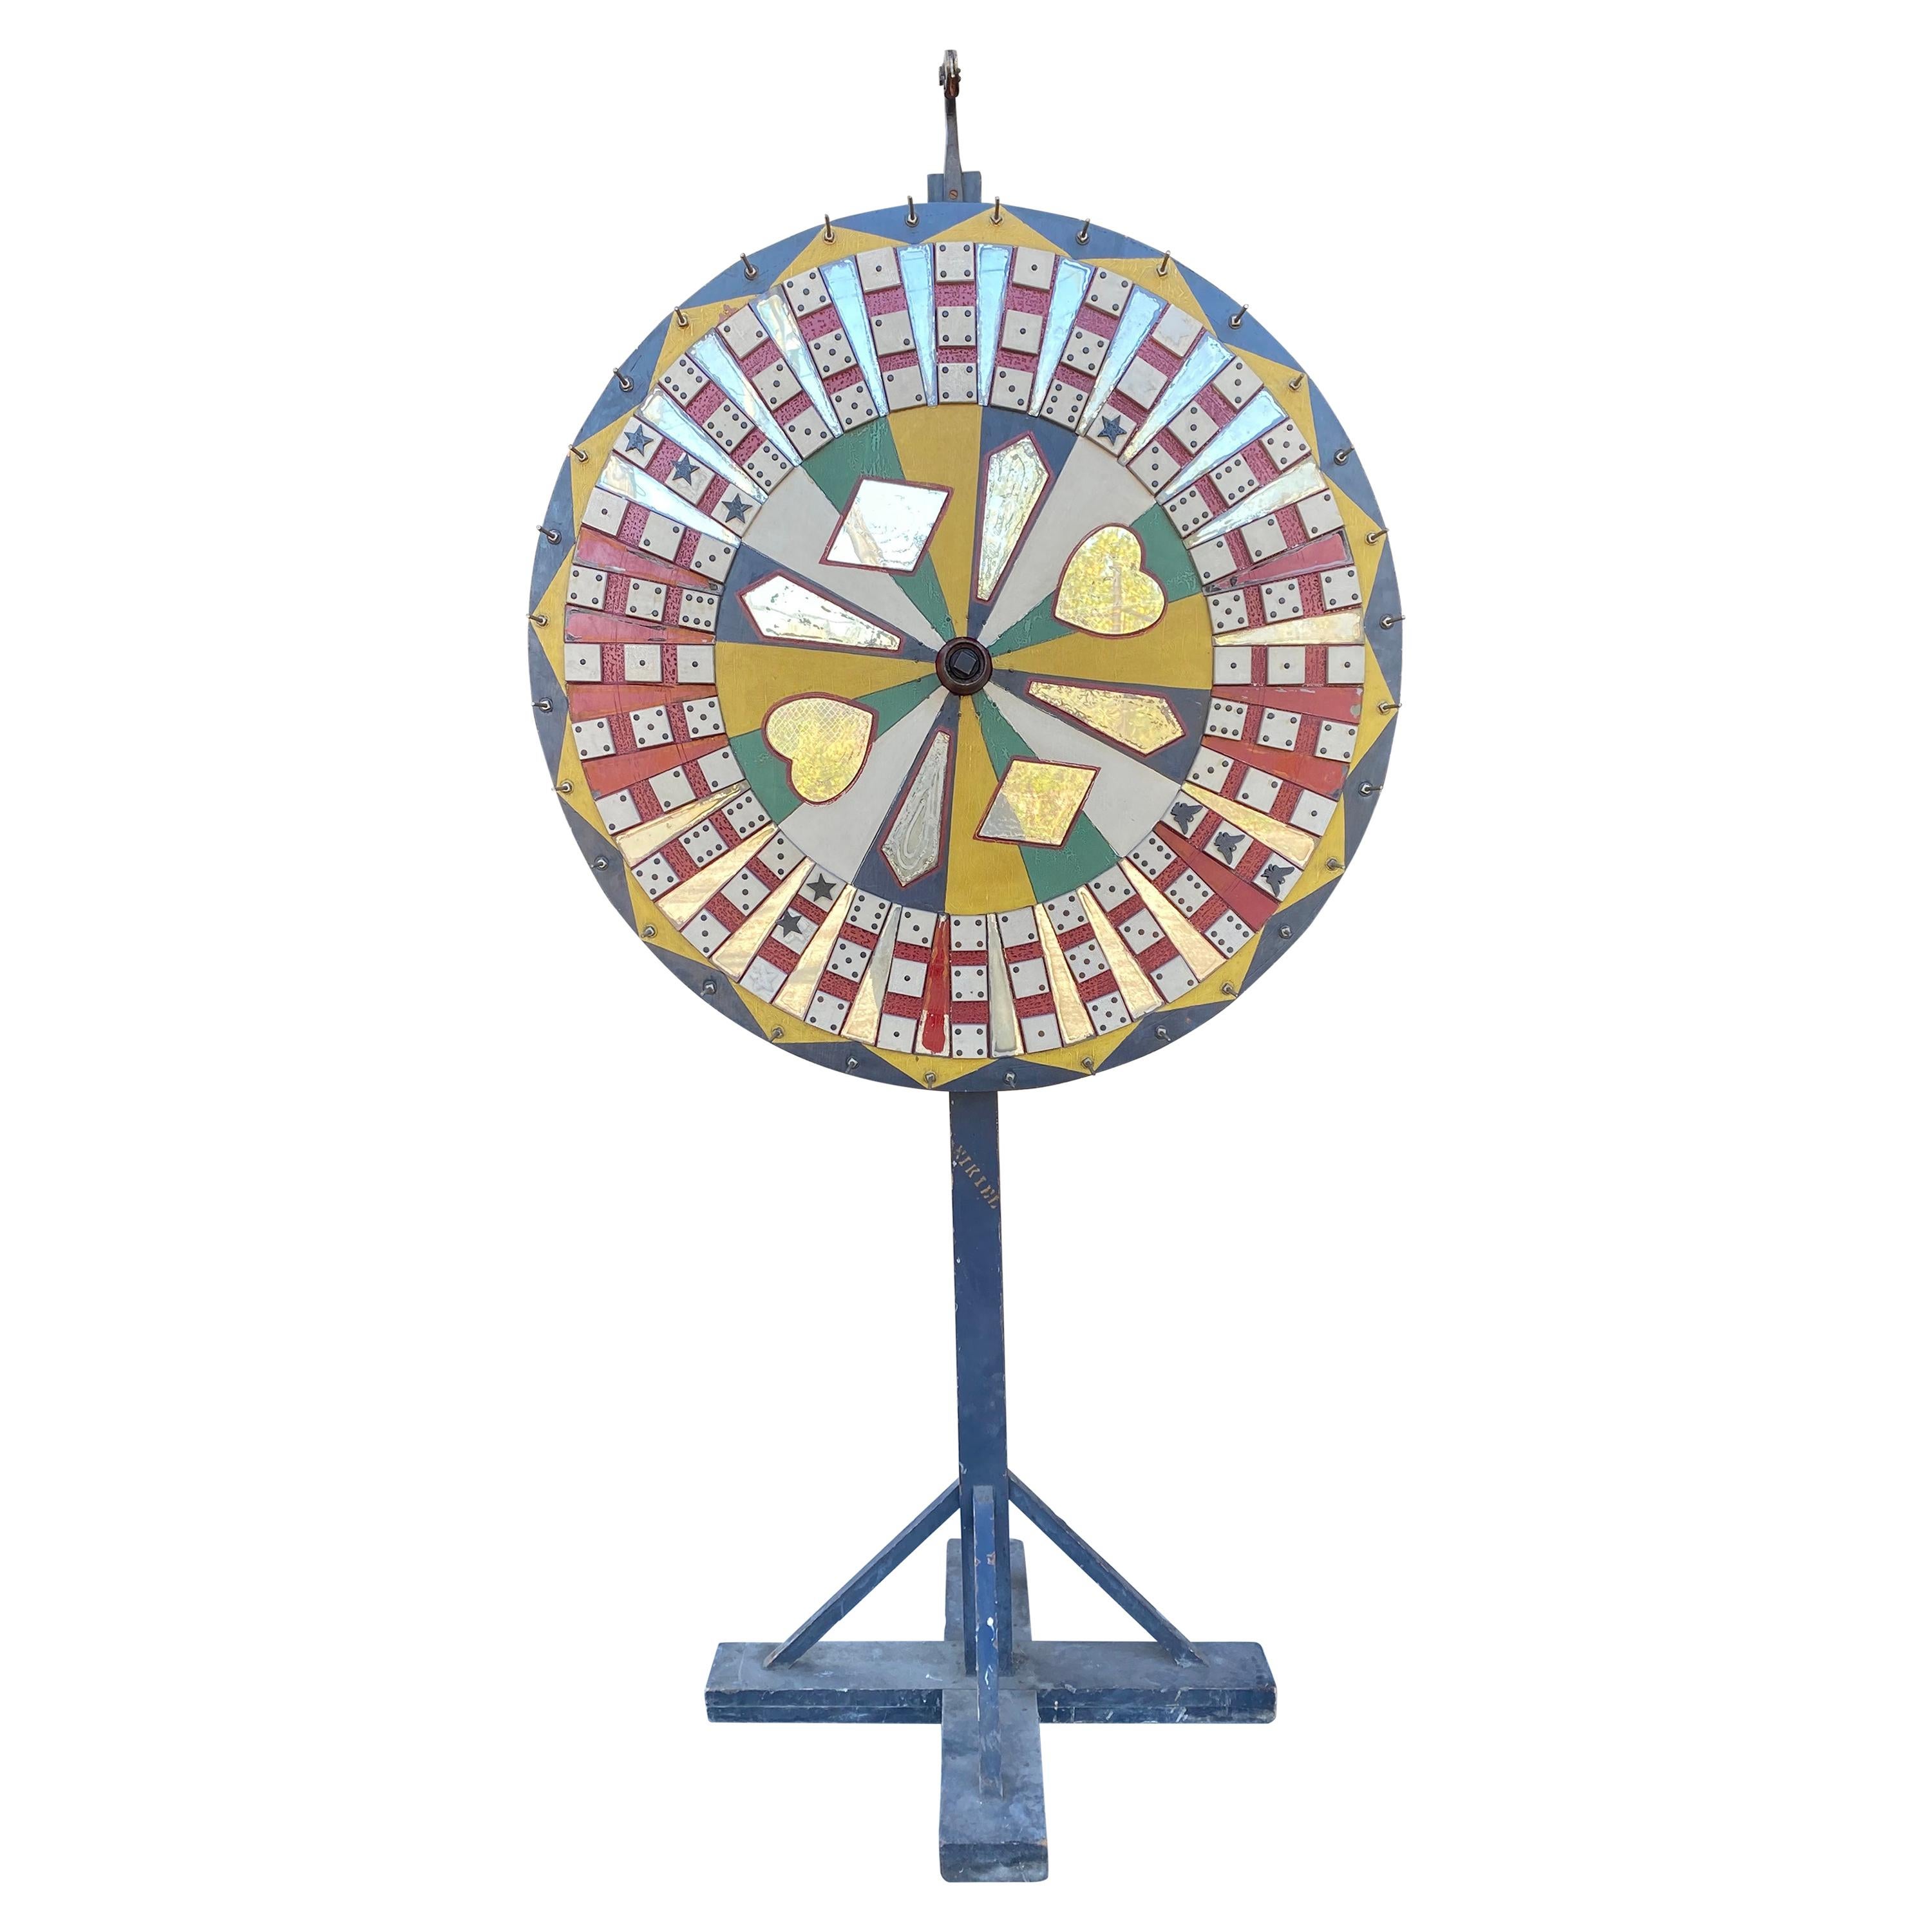 Antique Folk Art Carnival Game Wheel, Spinner, Gambling Device, Signed Nikiel